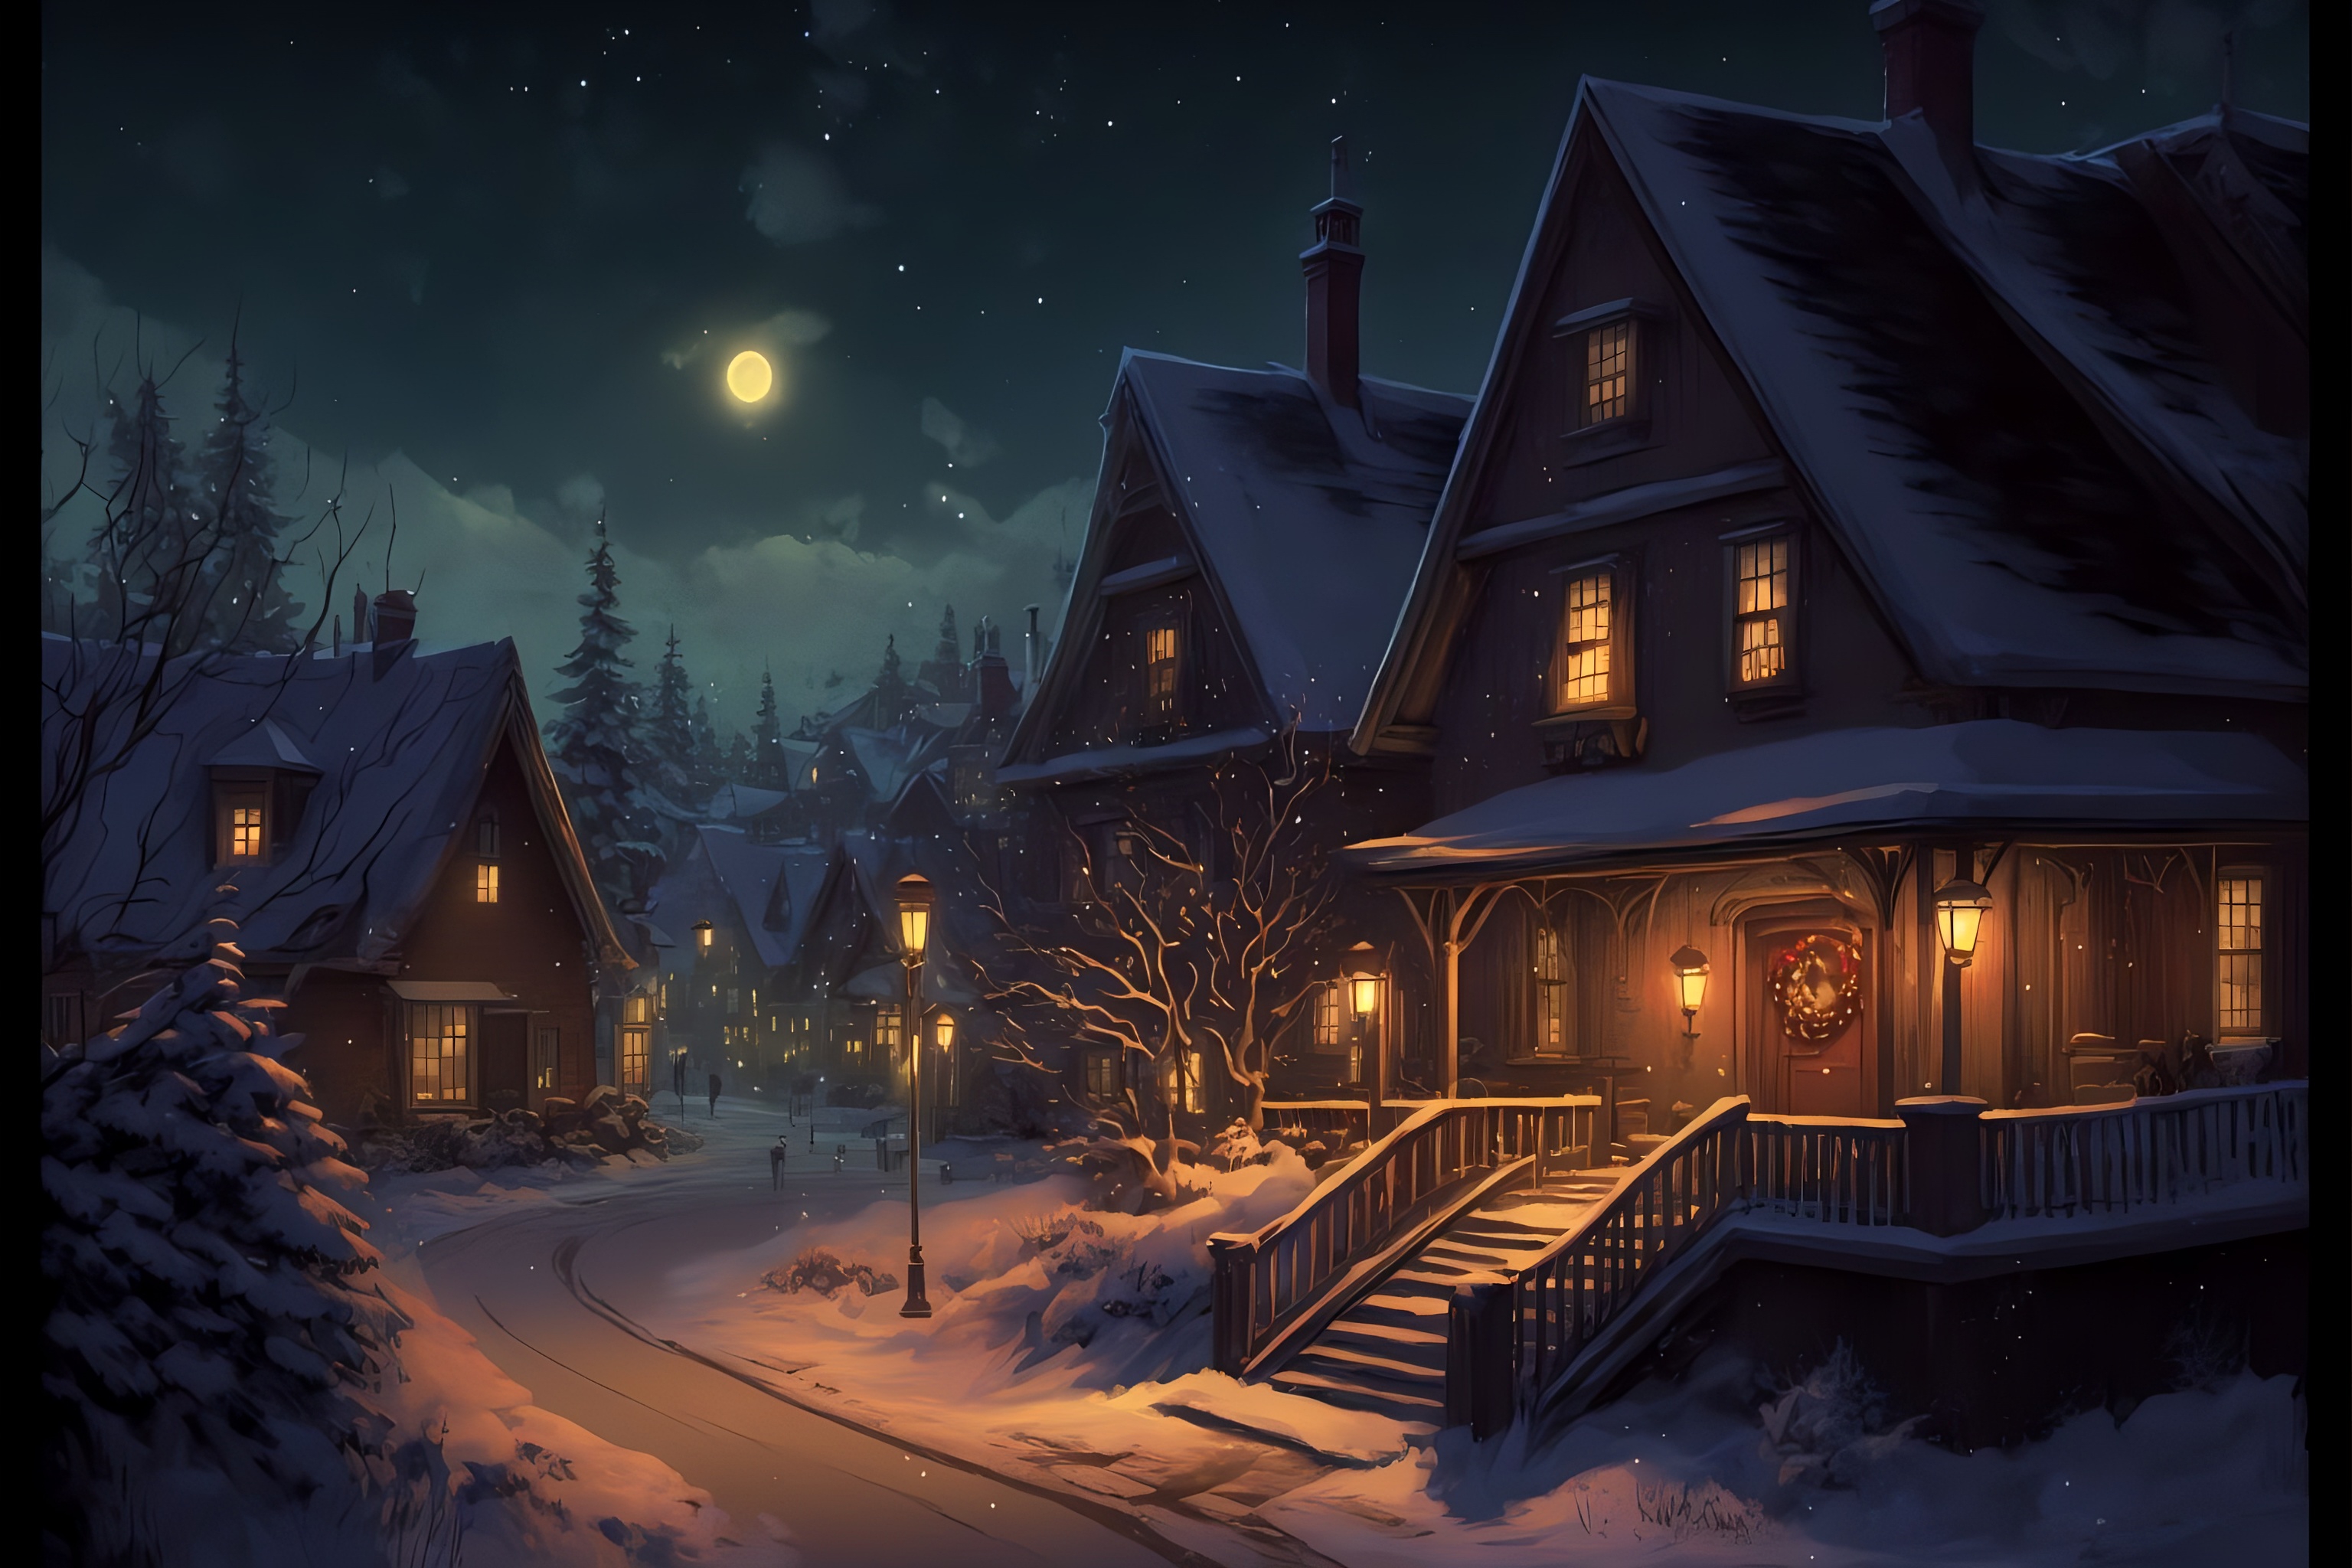 General 3072x2048 snow Christmas full moon trees pine trees house night landscape digital art AI art